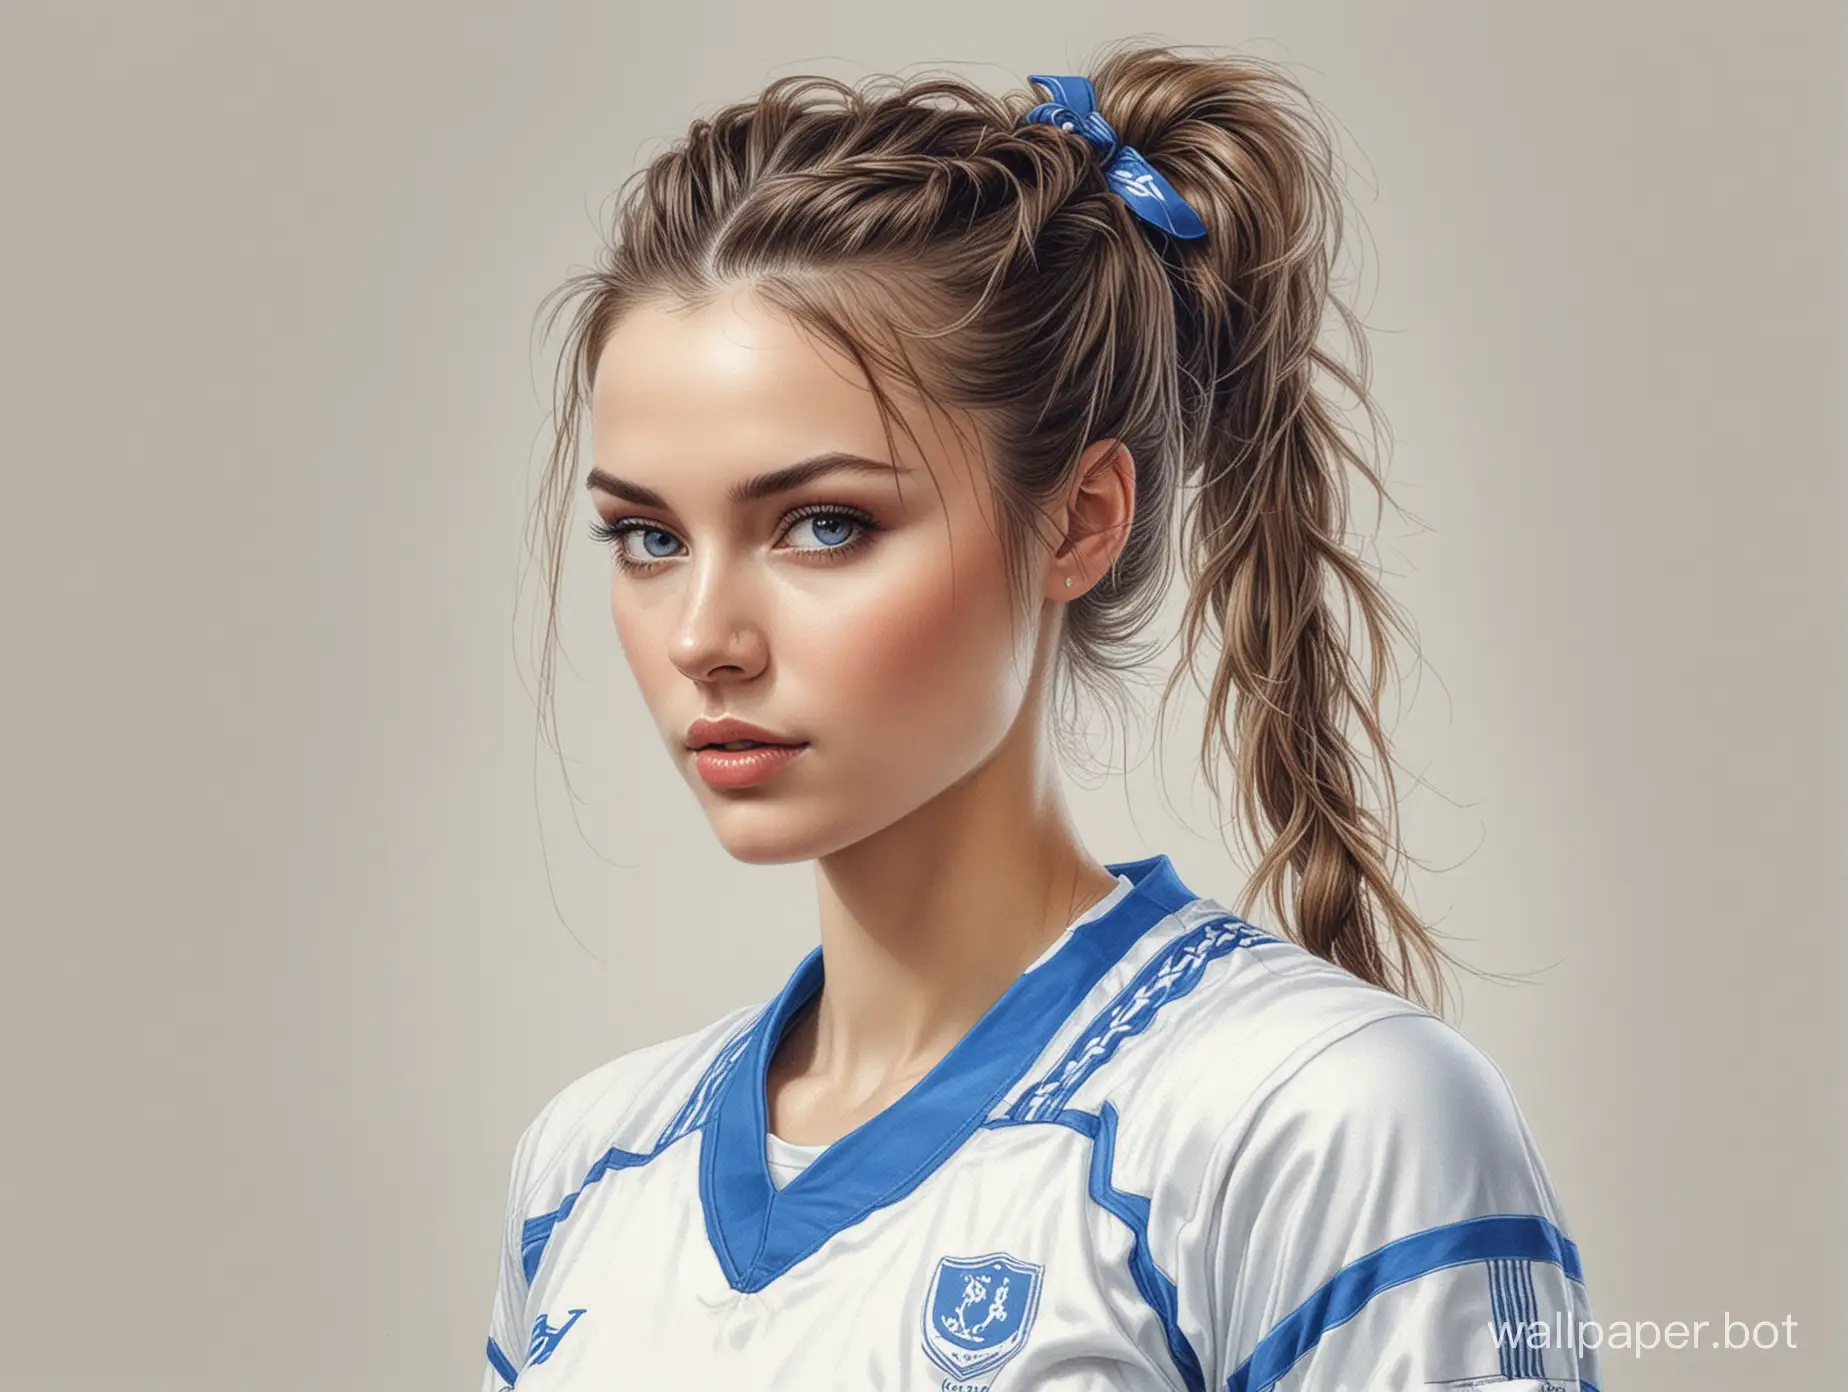 Realistic-Colored-Pencil-Drawing-of-Anna-Komarova-in-Bright-Blue-Soccer-Uniform